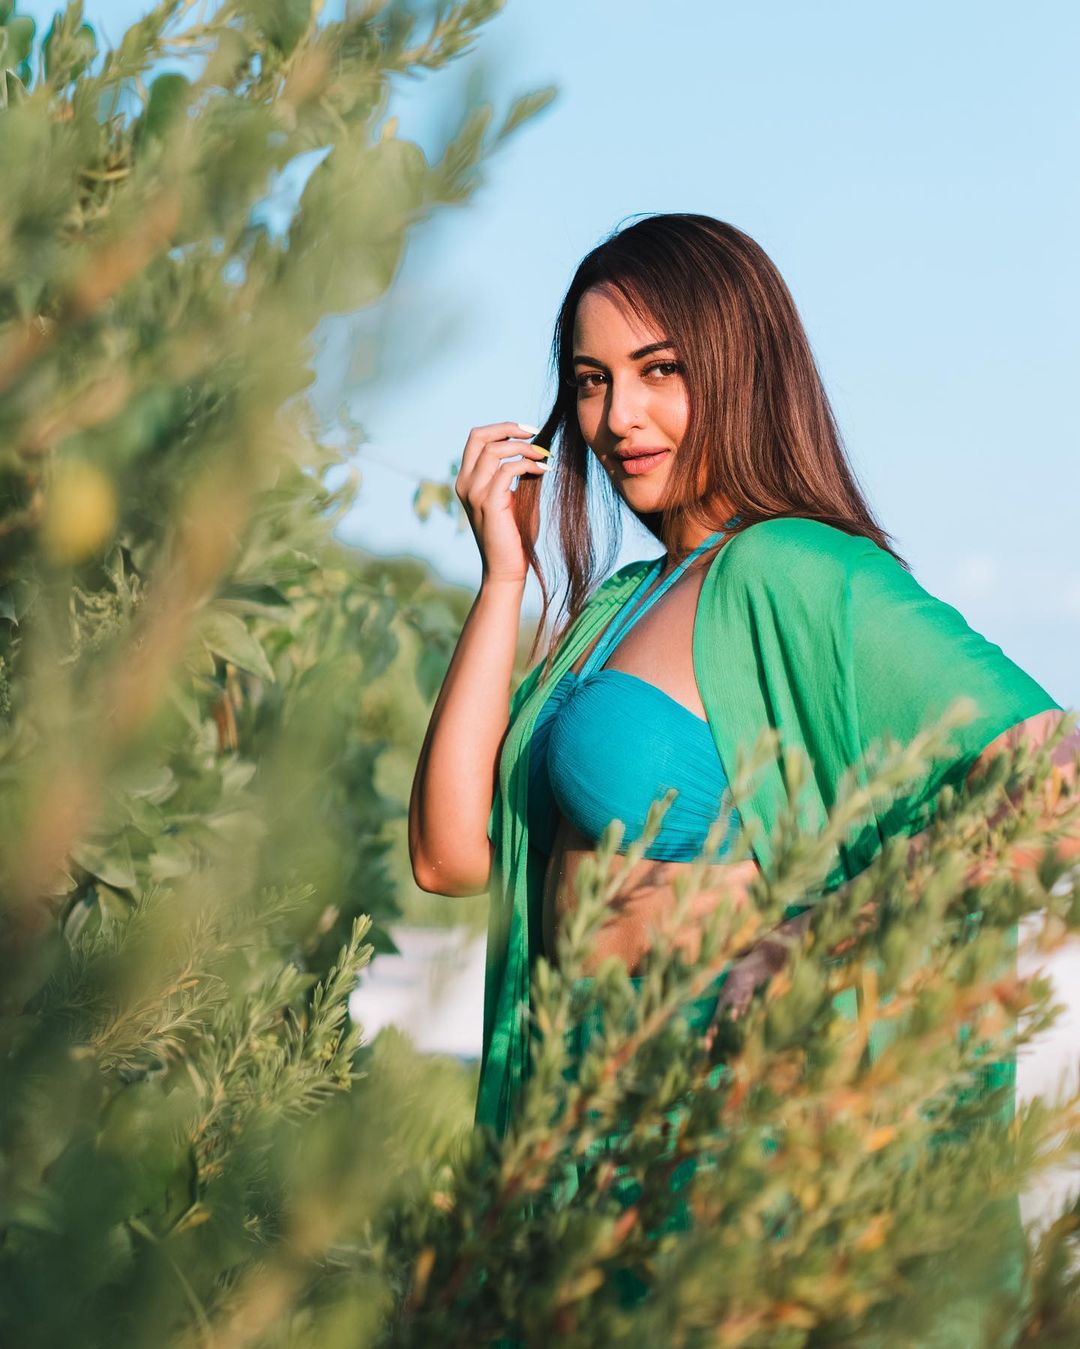 Sonakshi Sinha indulges in an impromptu photoshoot in her resort wear